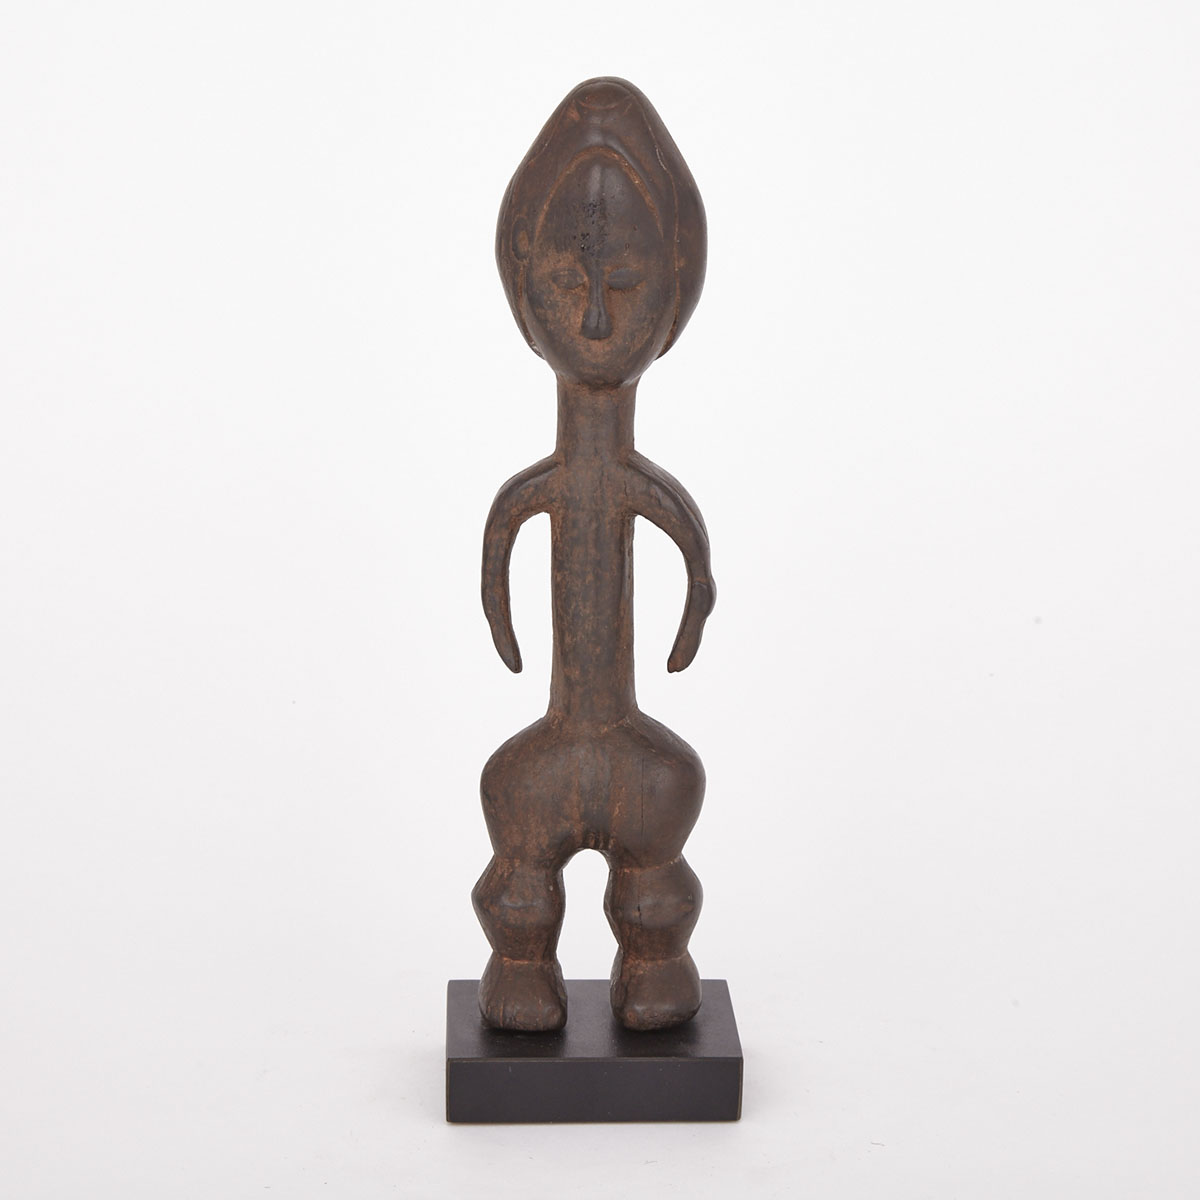 Zande Carved Wood Fetish Figure, Africa, 20th century